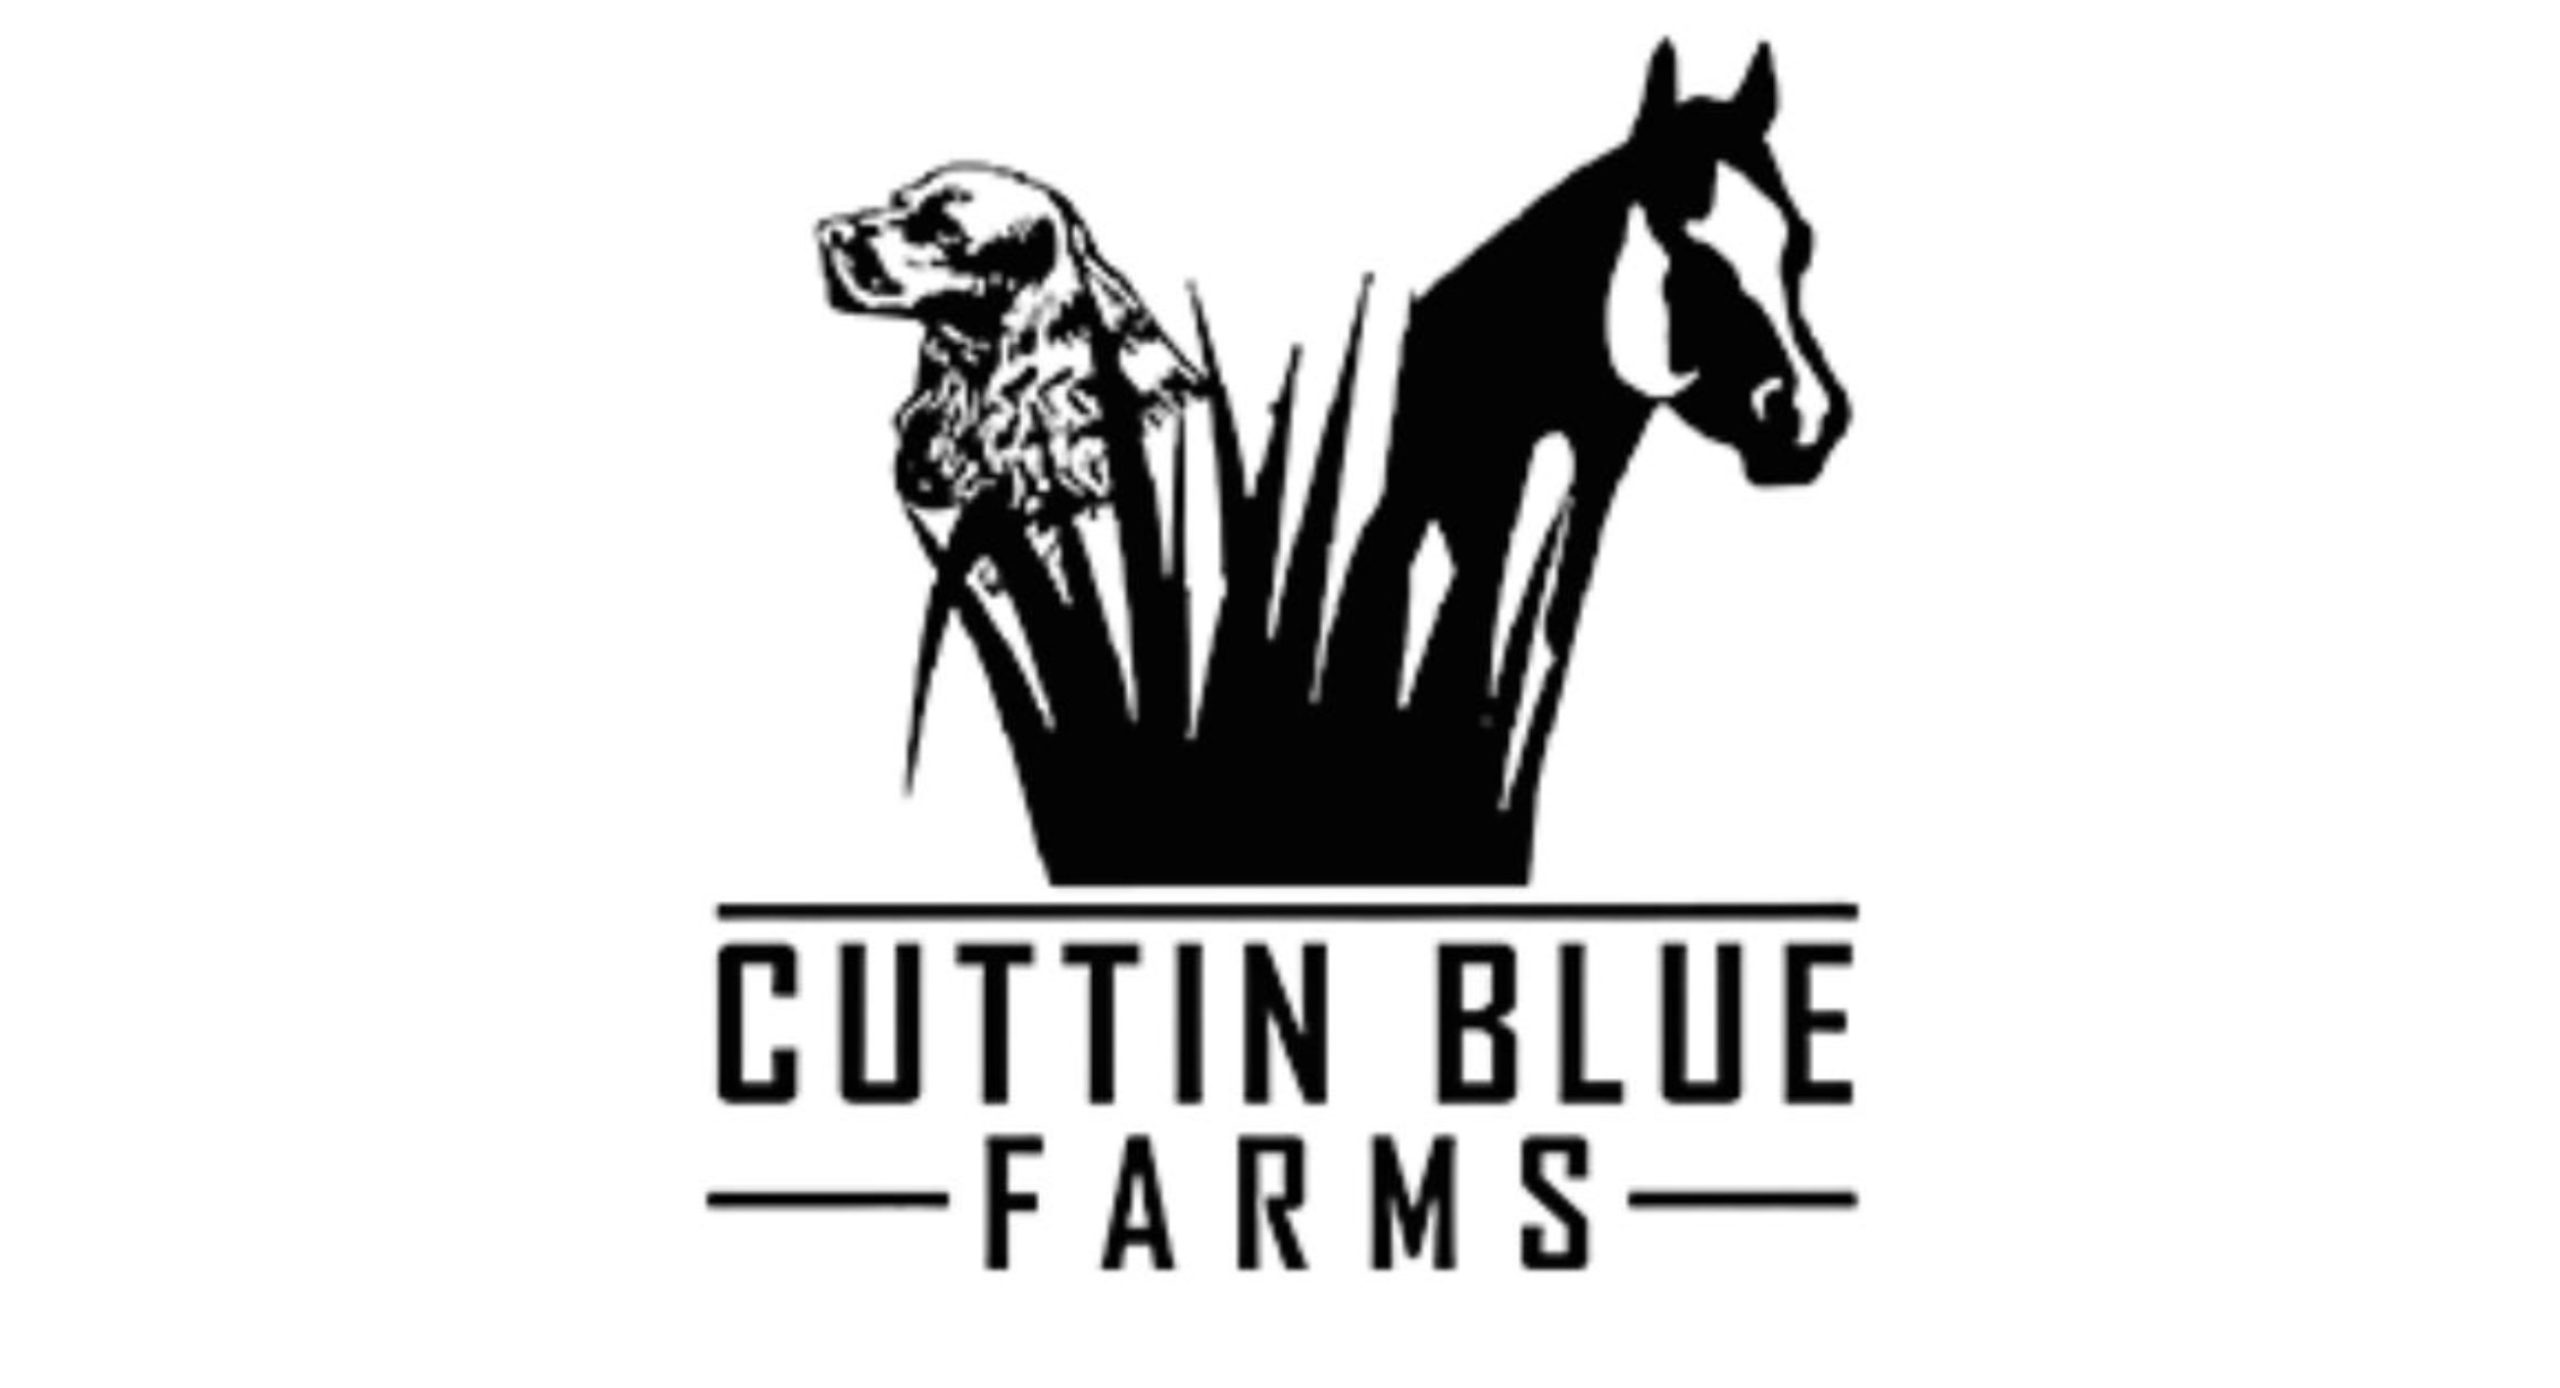 Cuttin Blue Farms scaled -